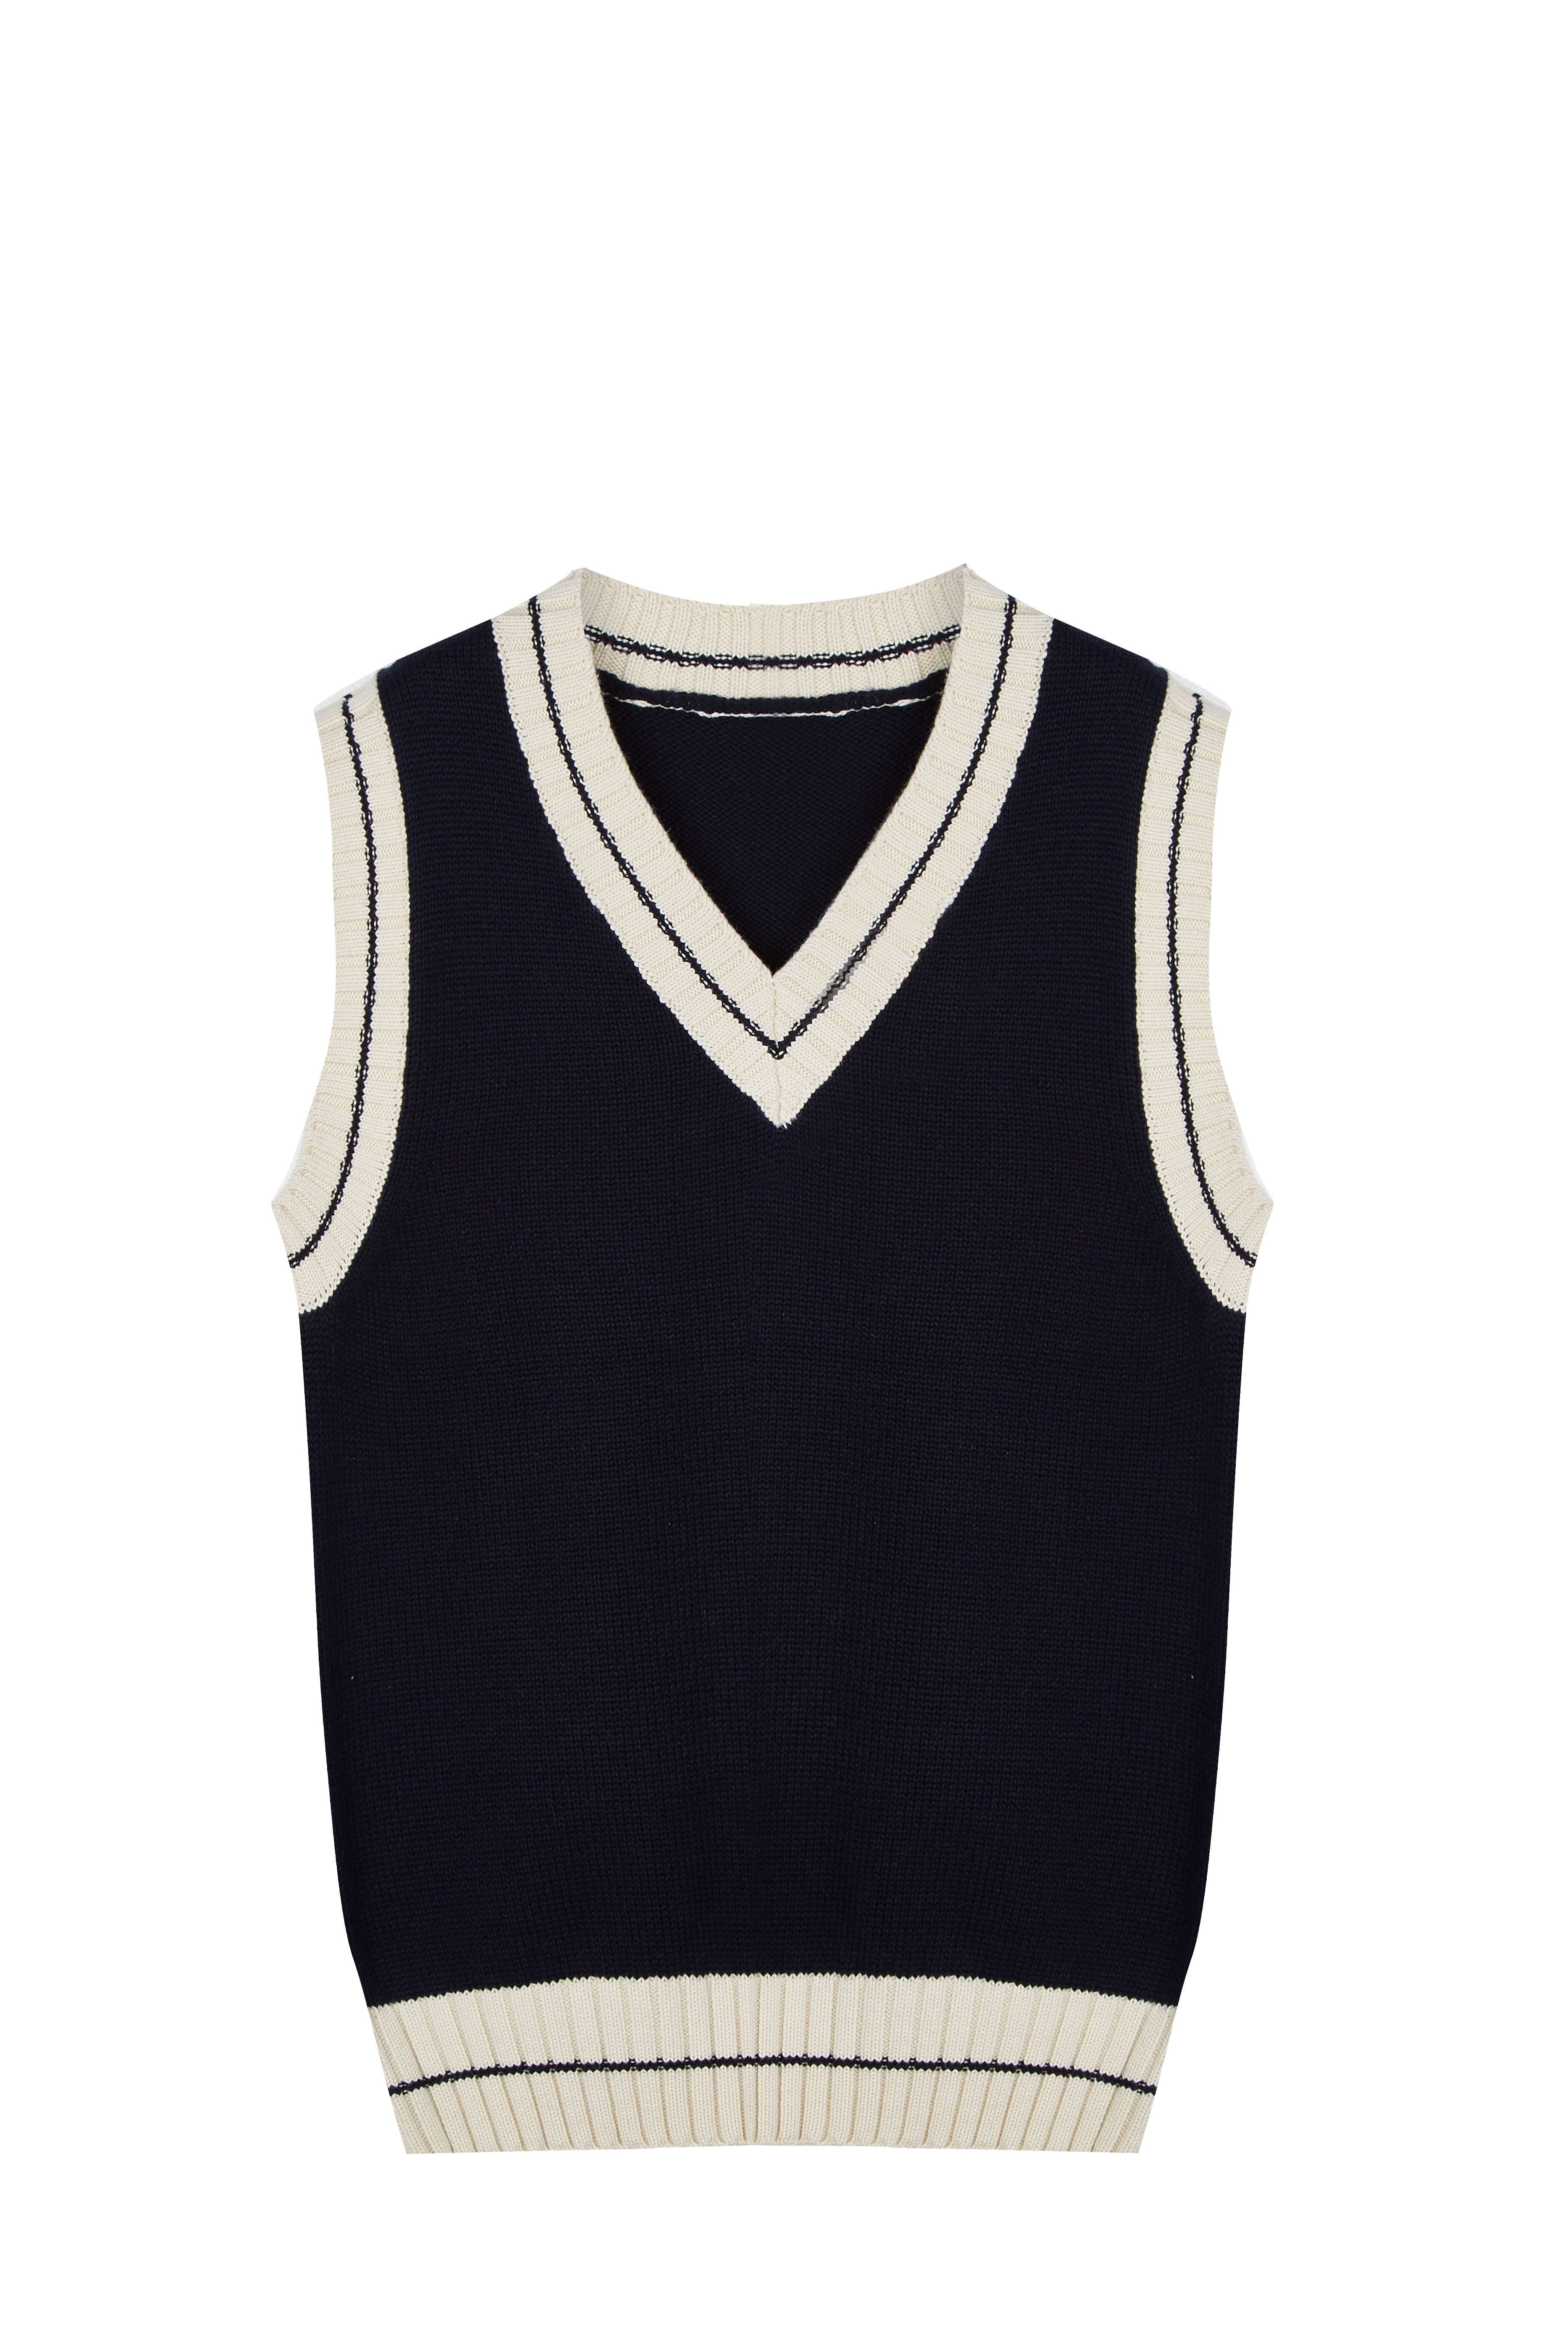 Kids's Sweater Simple Vest Cotton V-Neck School Uniform Pullover Top